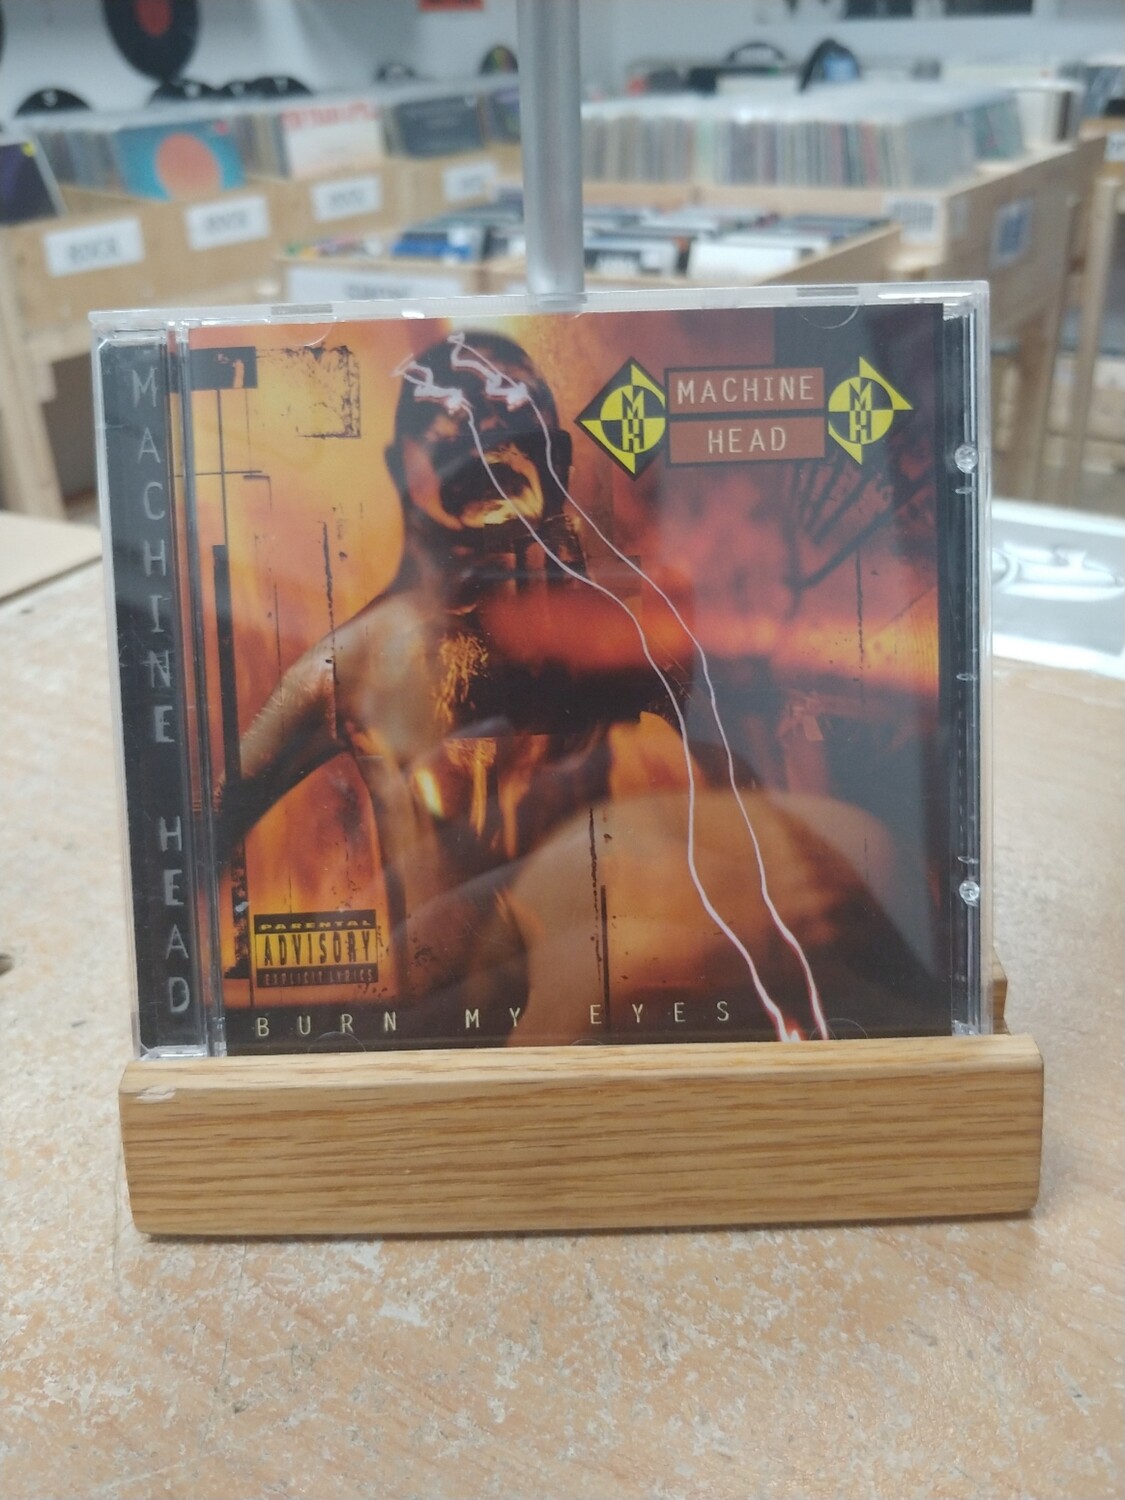 Machine Head - Burn my eyes (CD)